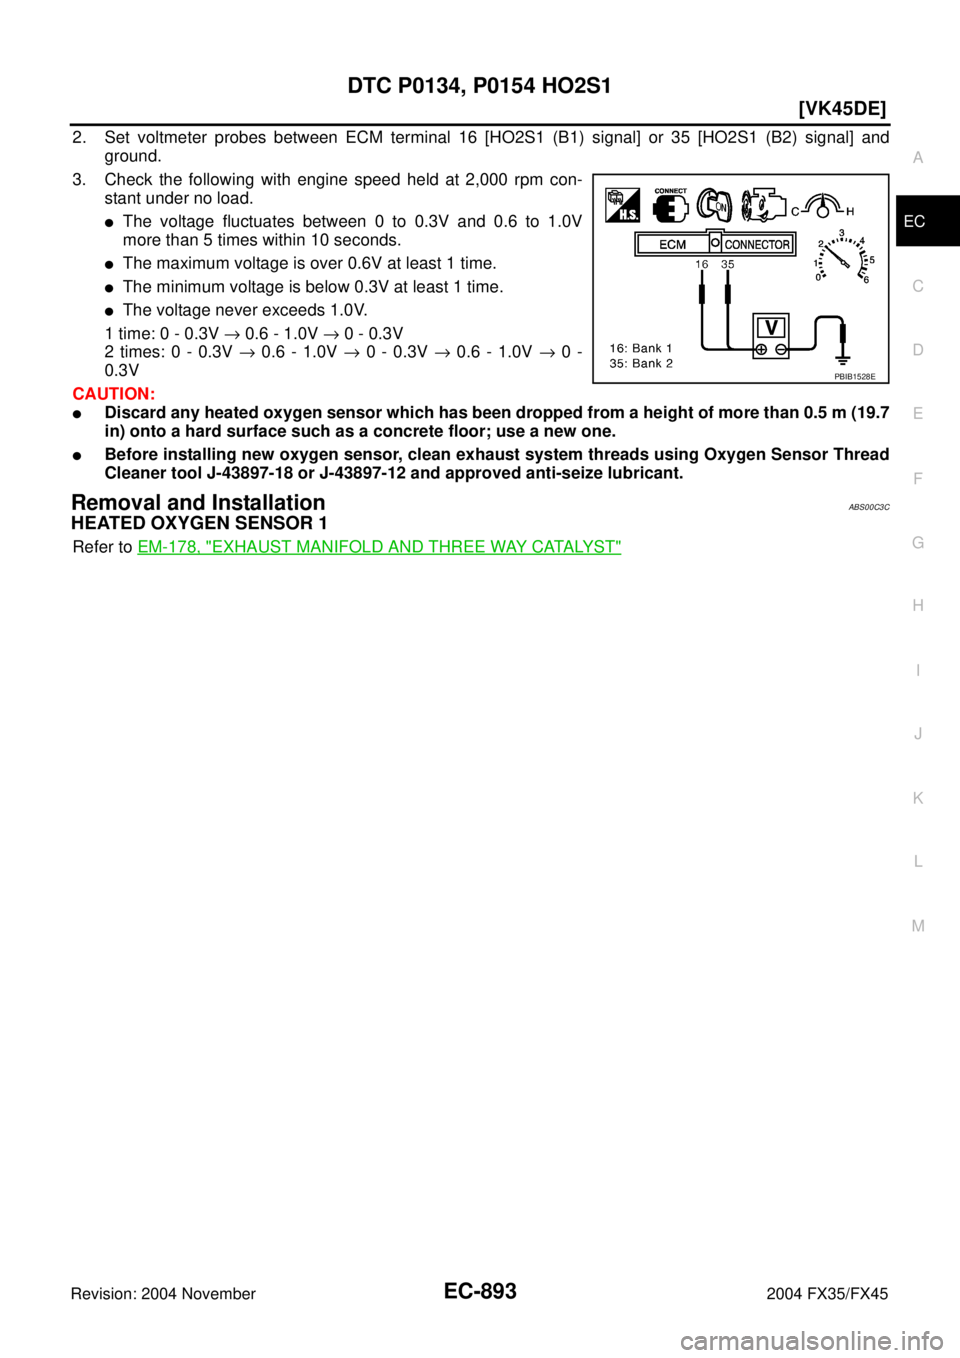 INFINITI FX35 2004  Service Manual DTC P0134, P0154 HO2S1
EC-893
[VK45DE]
C
D
E
F
G
H
I
J
K
L
MA
EC
Revision: 2004 November 2004 FX35/FX45
2. Set voltmeter probes between ECM terminal 16 [HO2S1 (B1) signal] or 35 [HO2S1 (B2) signal] an